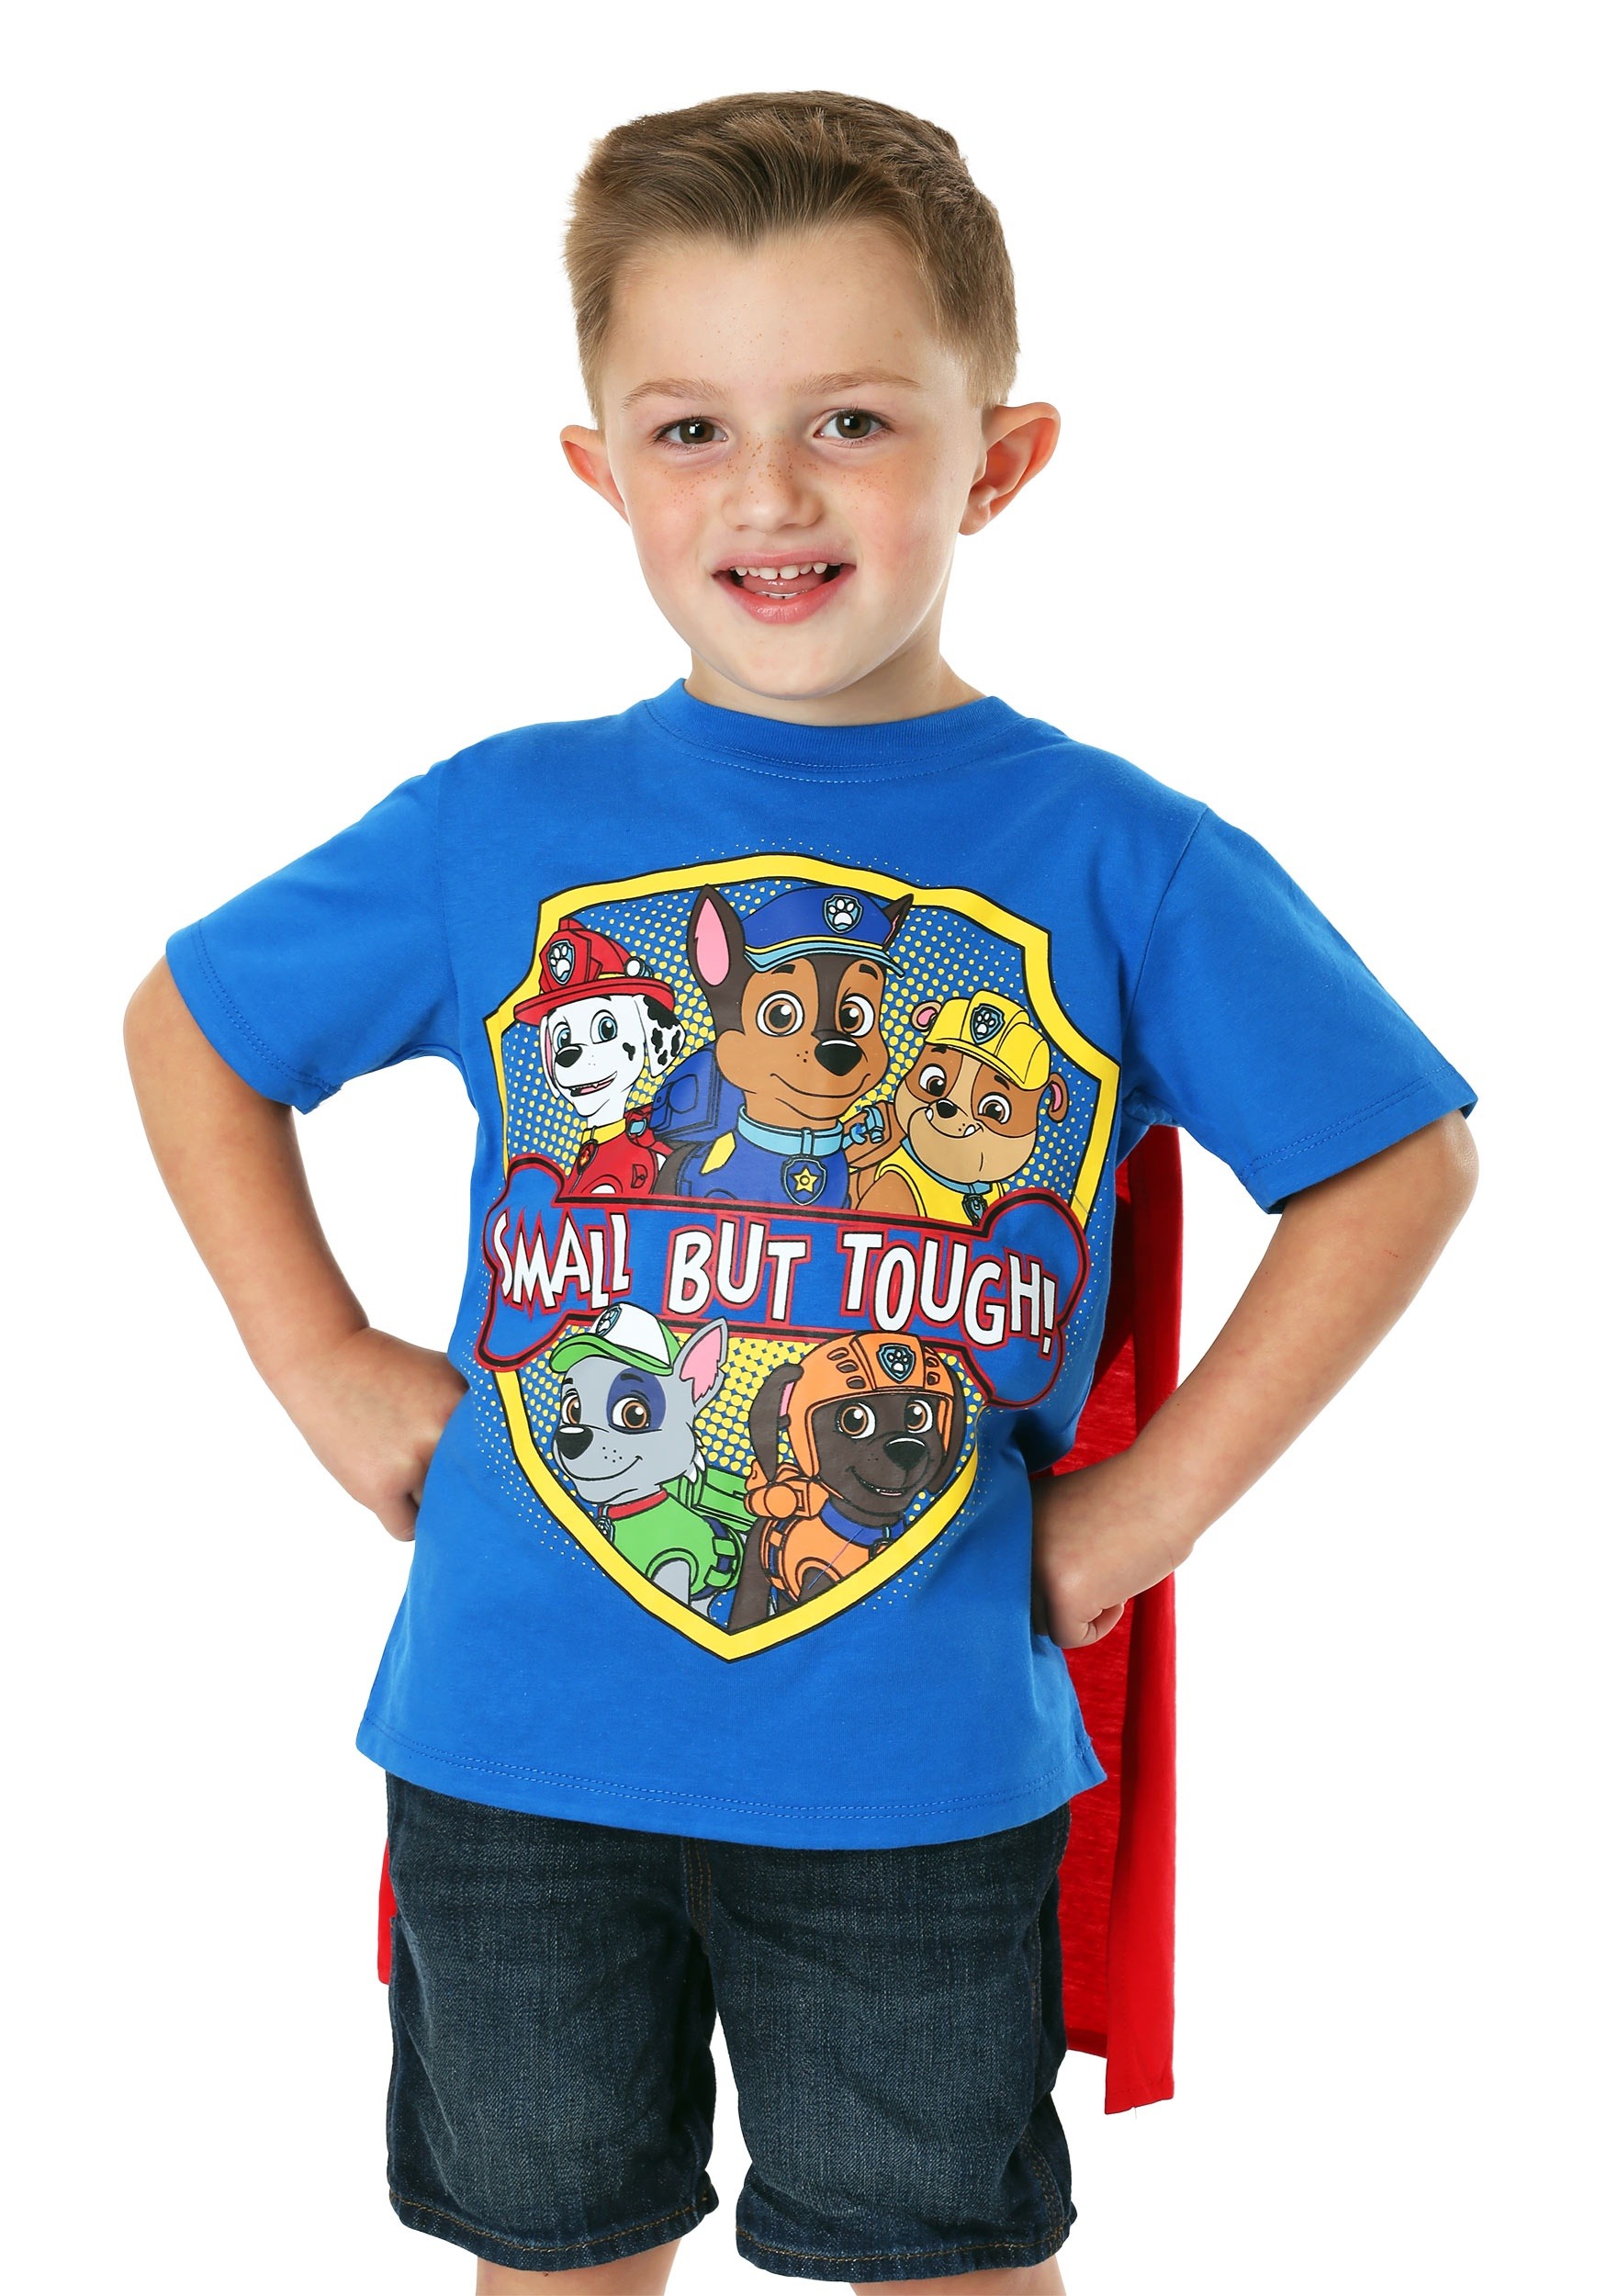 Paw Patrol Boys Toddler Small But Tough Cape T-Shirt